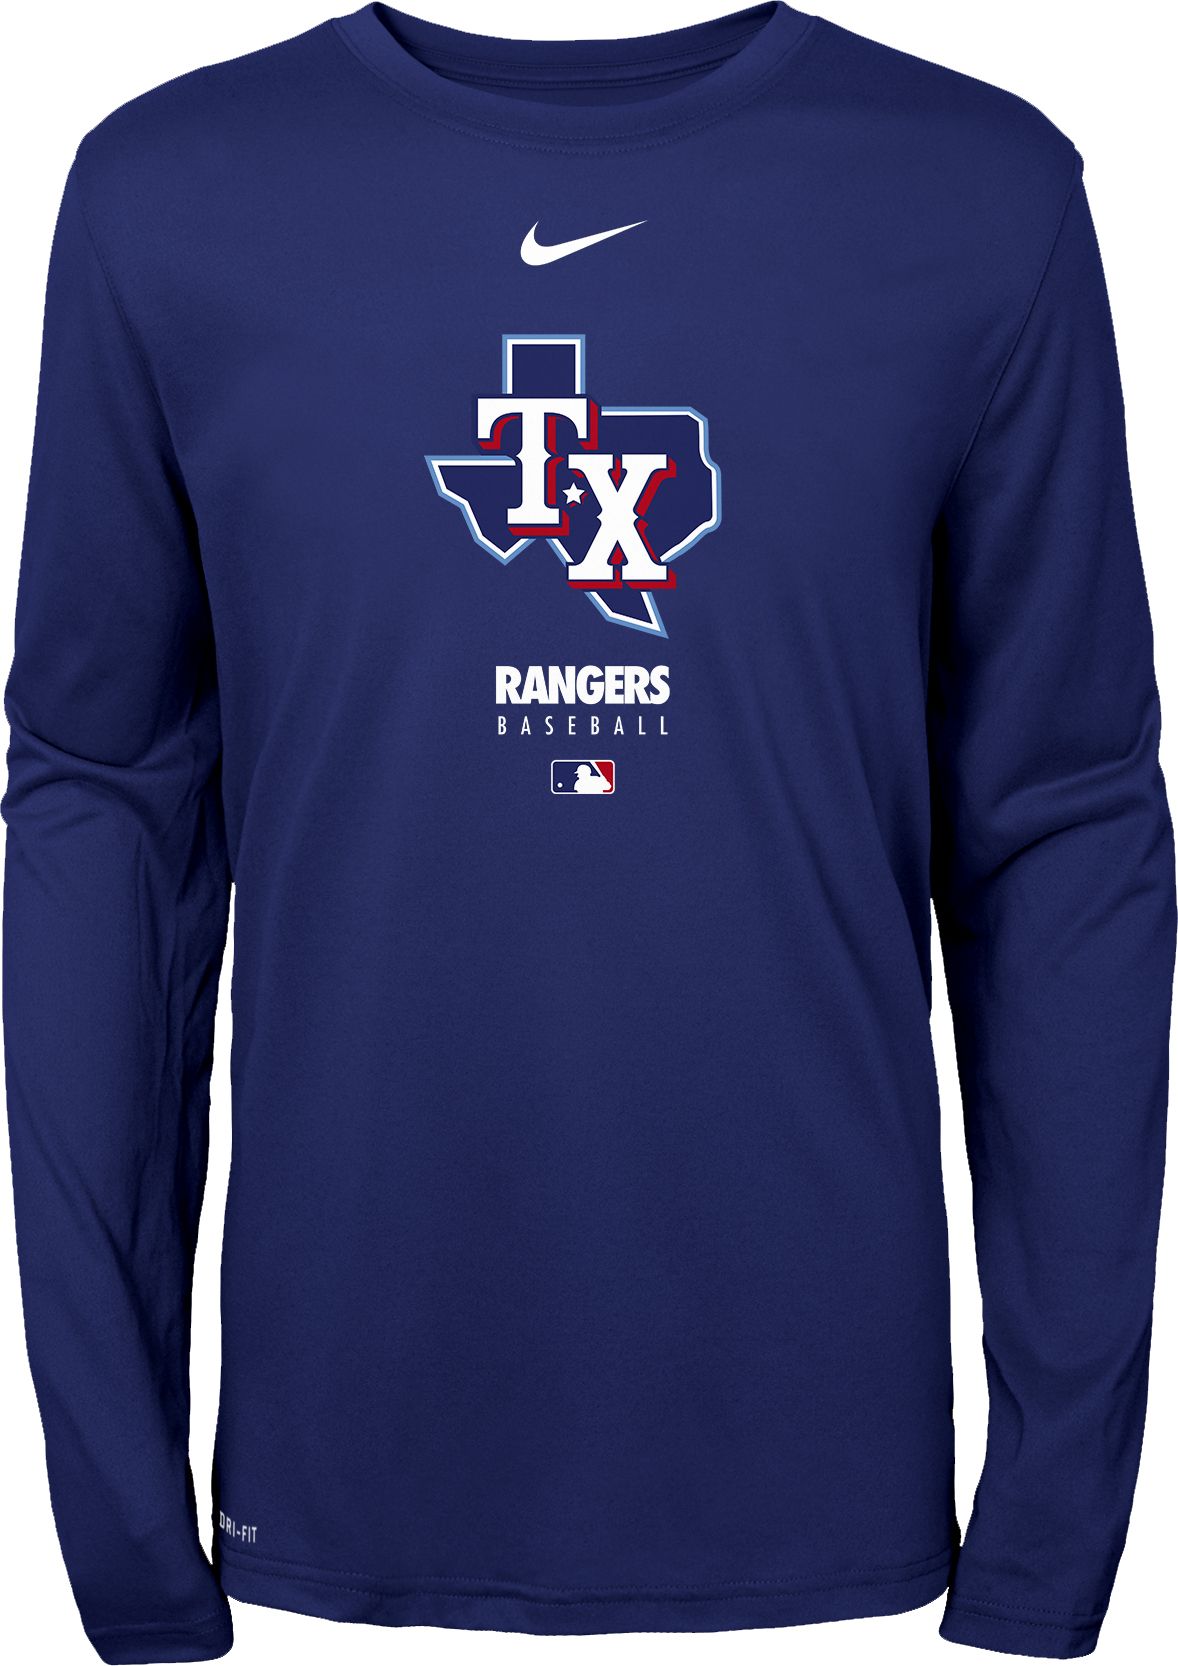 children's texas rangers shirts